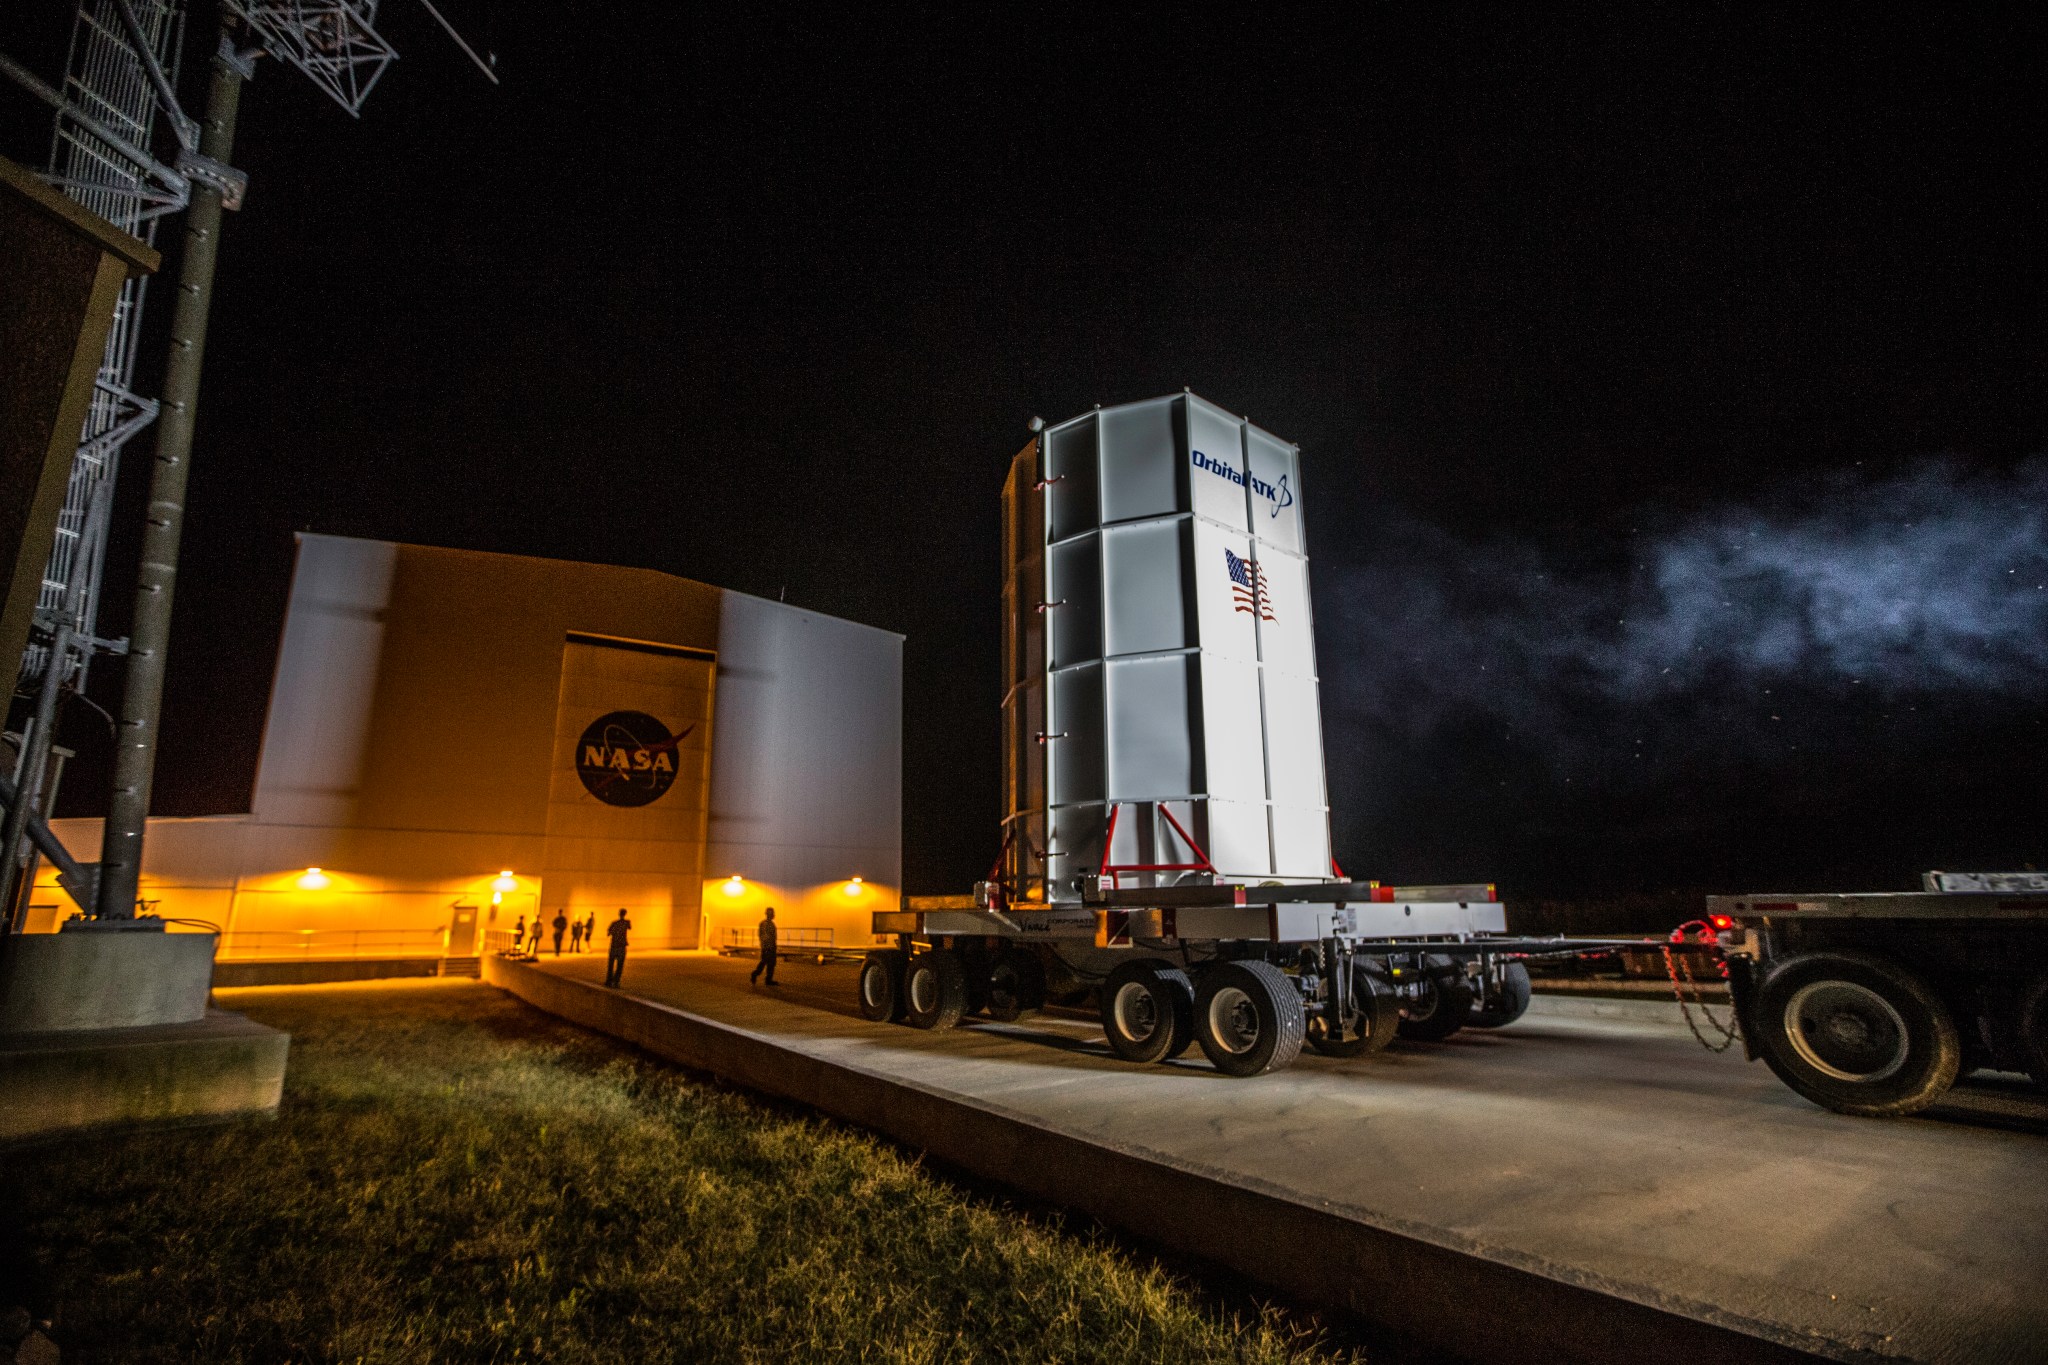 Orbital ATK's Cygnus spacecraft arrived on Oct. 2, 2016 at the Horizontal Integration Facility at NASA's Wallops Flight Facility